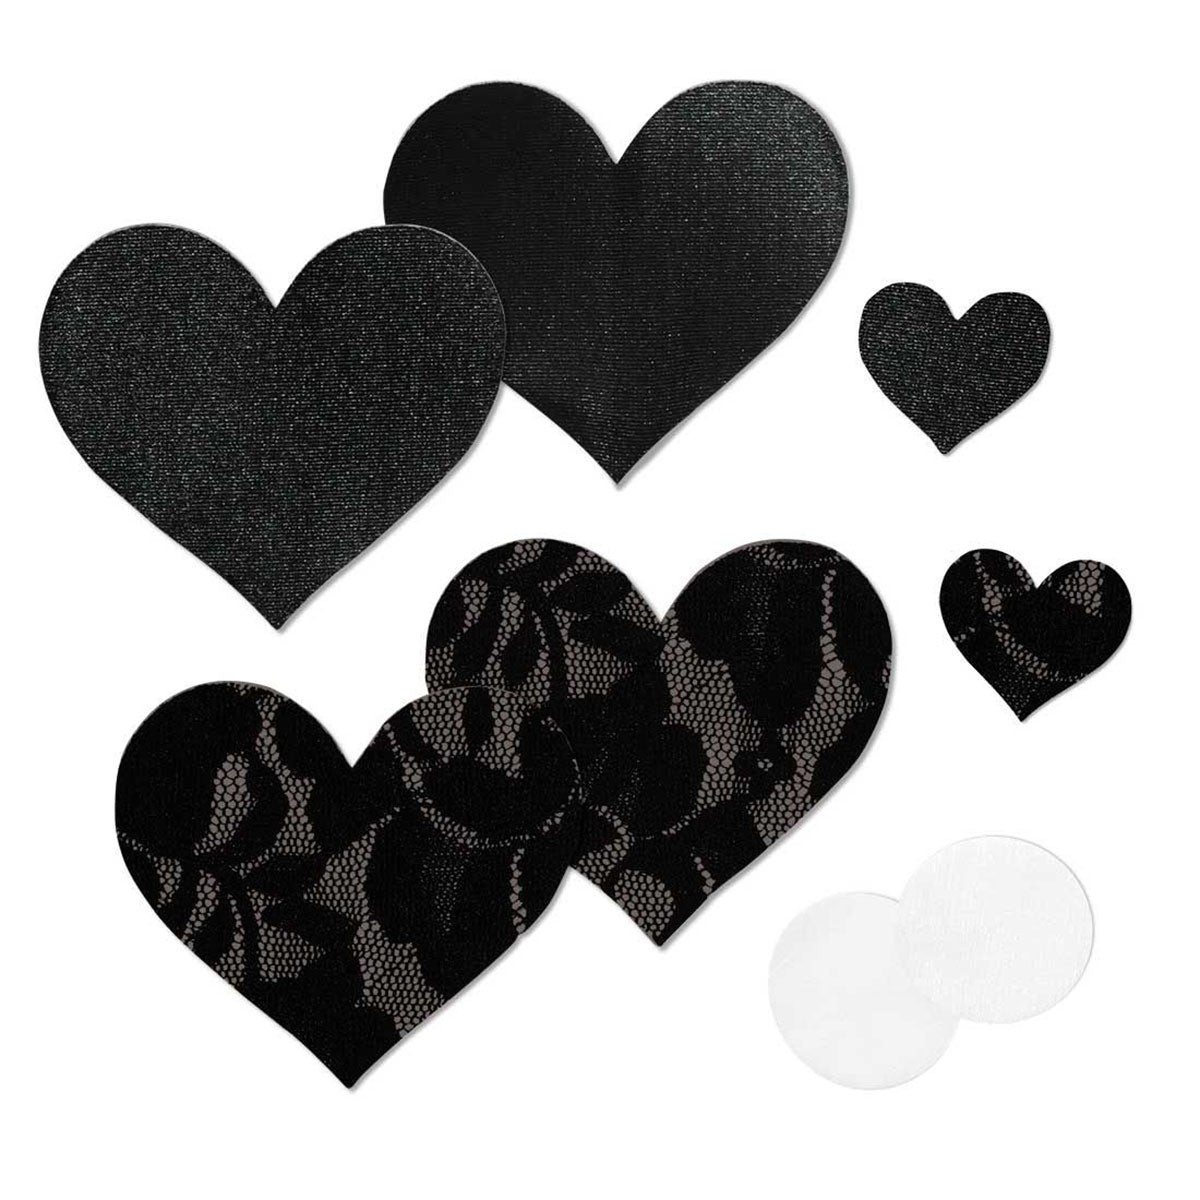 Nippies Basics Black Hearts